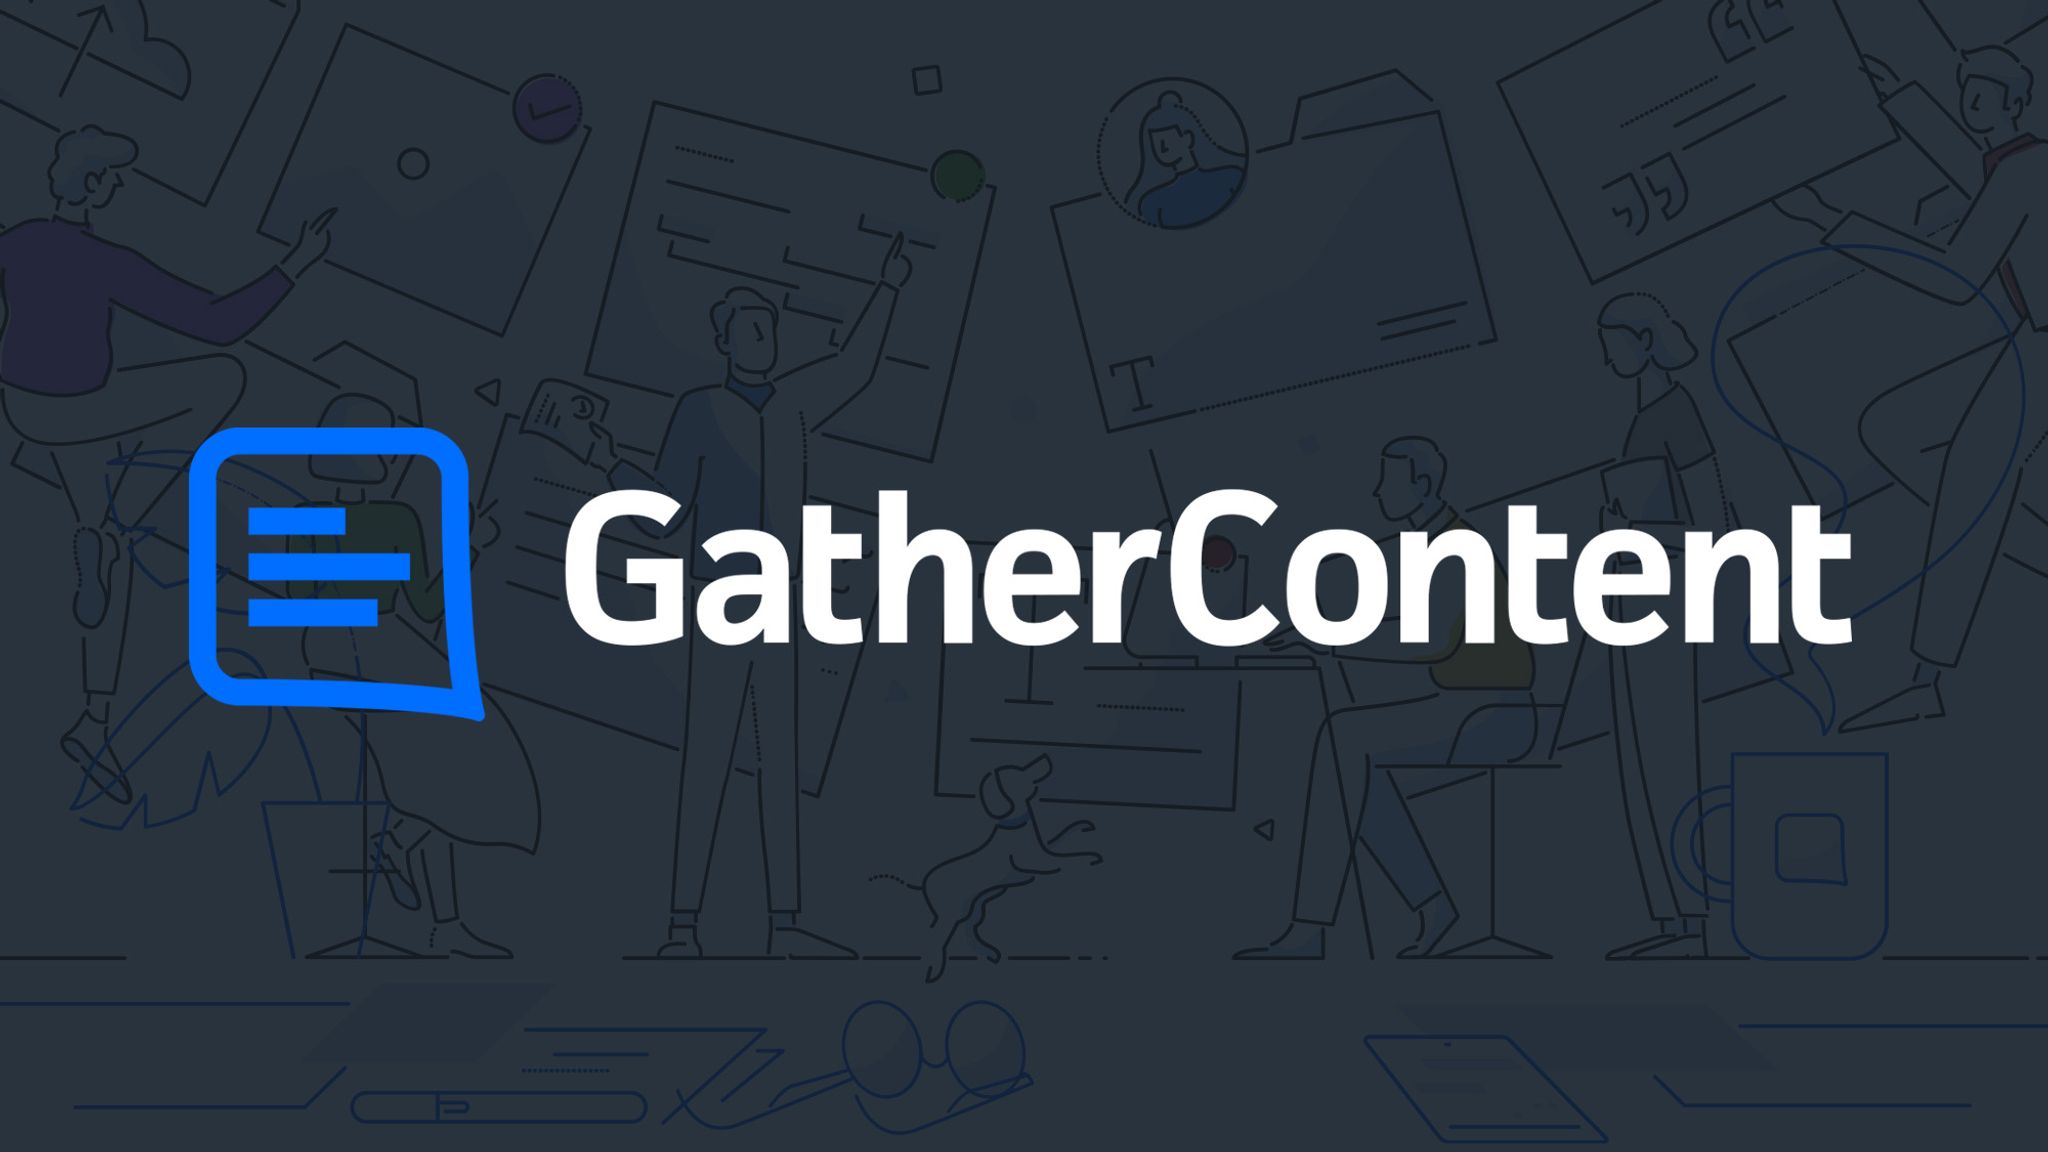 GatherContent logo